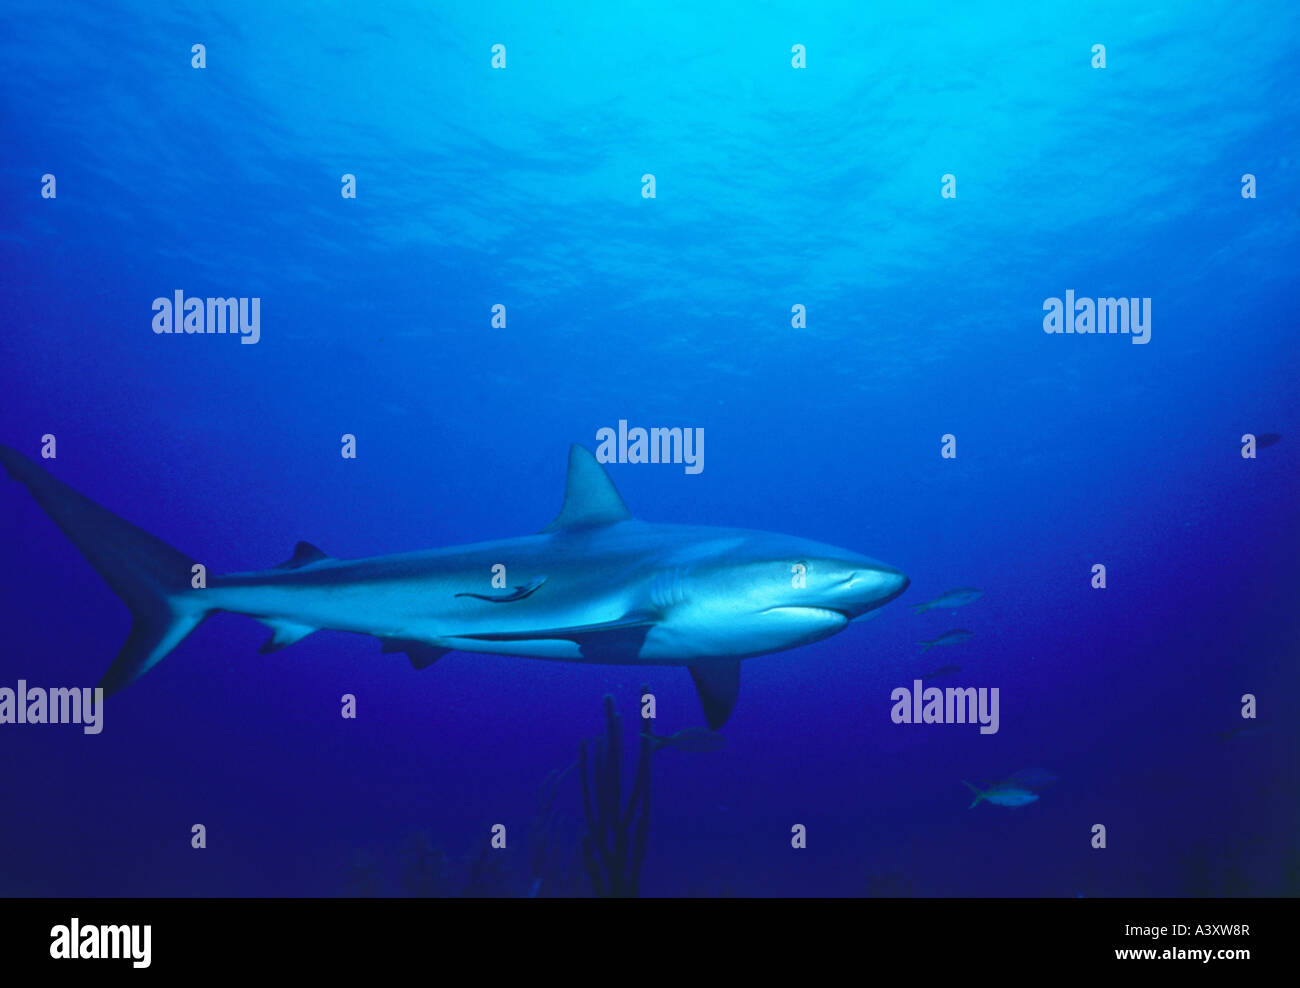 zoology / animals, fish, sharks, Gray reef shark, (Carcharhinus amblyrhynchos), predatory fish, animal, Stock Photo